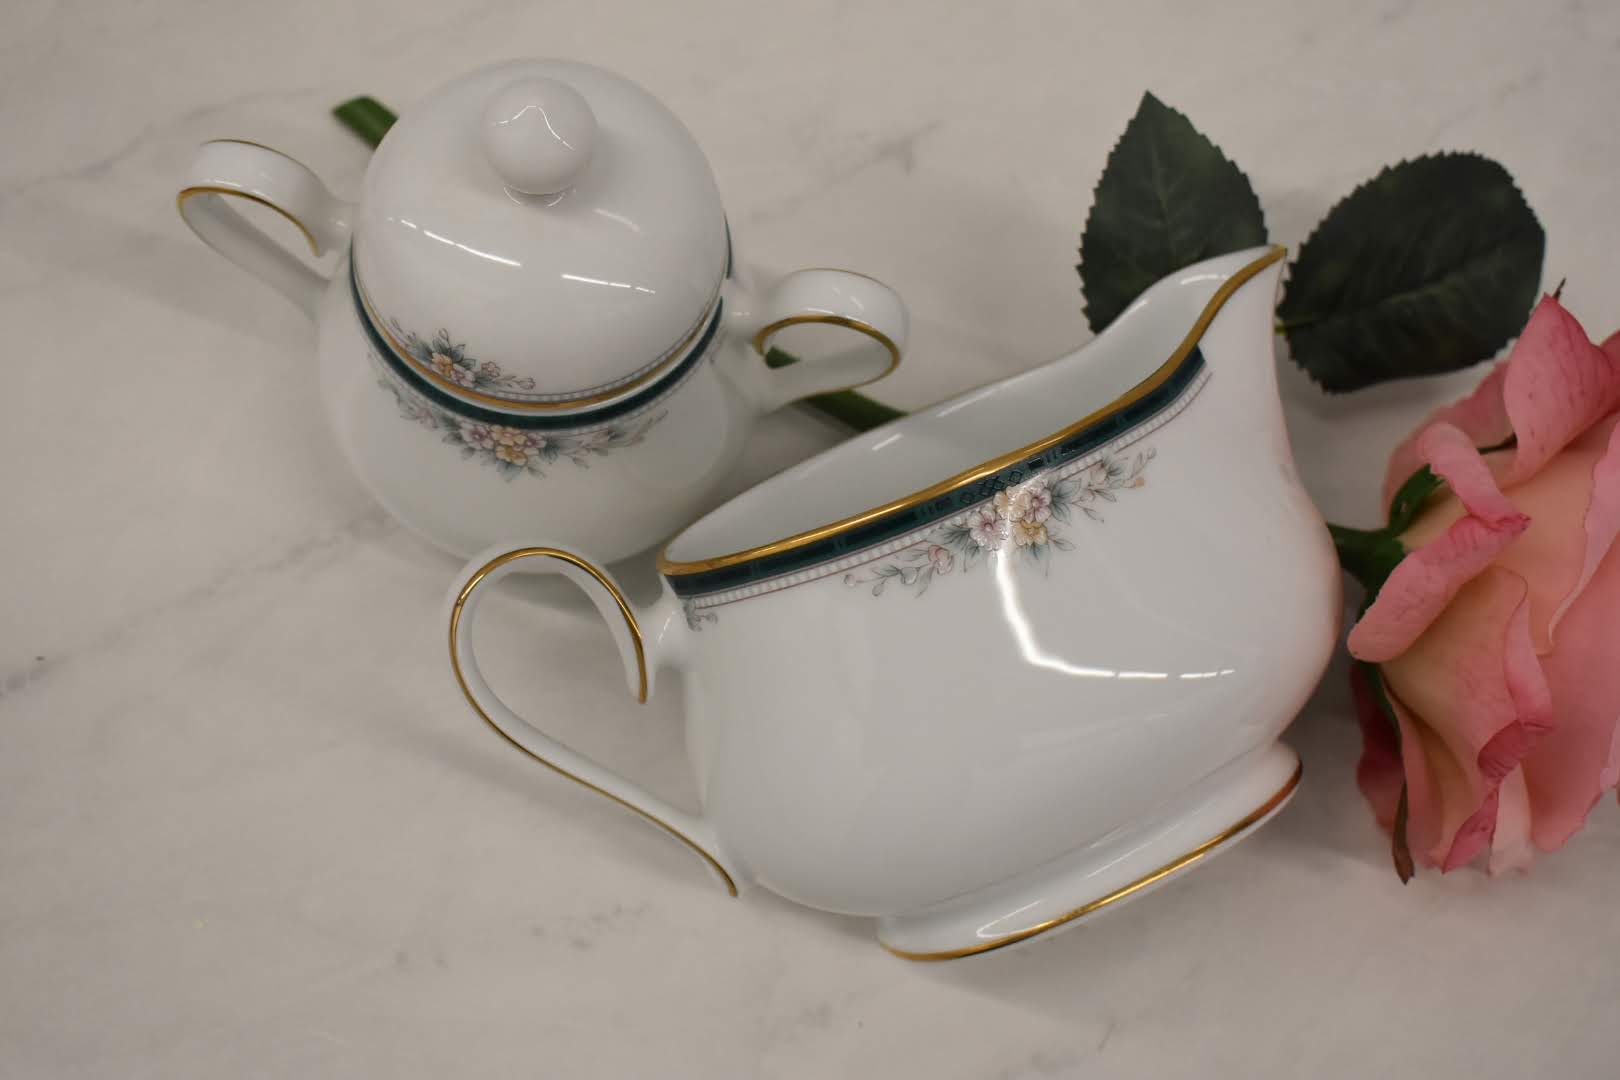 Noritake Landon - Fine Porcelain China - White Green Color - Sugar Bowl and Creamer or Gravy Boat Set